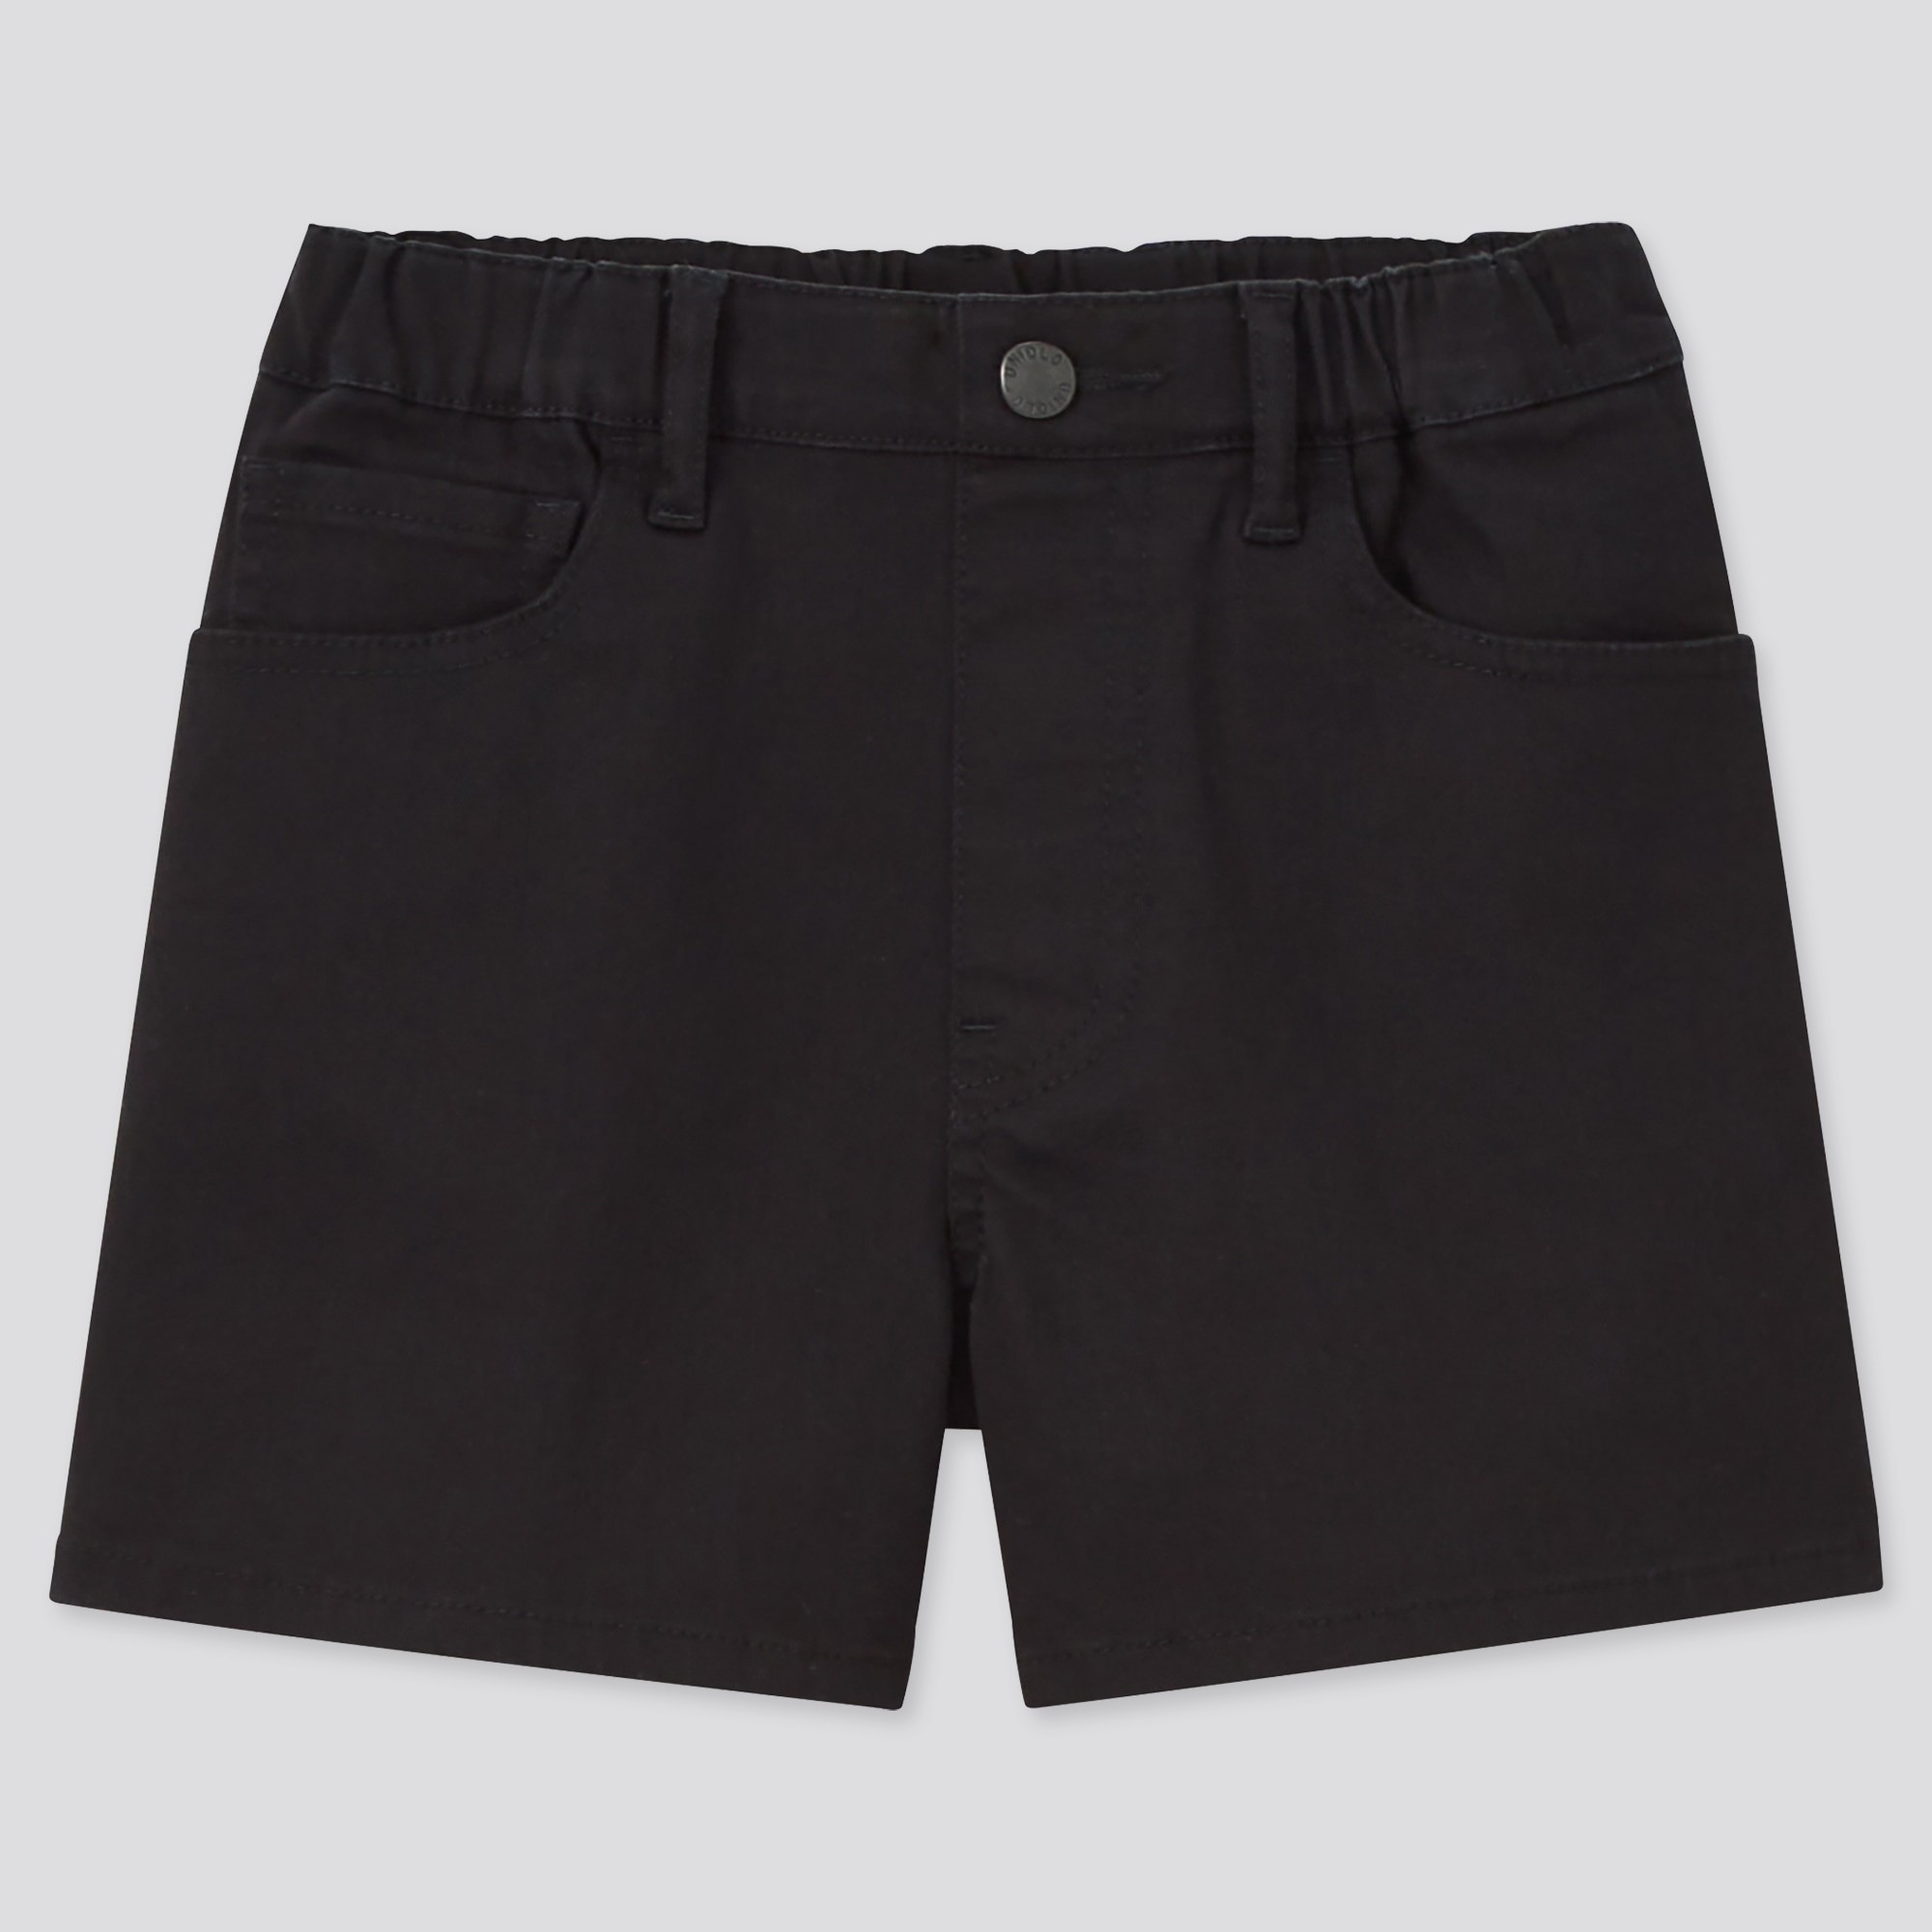 Amazon.com: Shorts for Teen Girls Ruffle Elastic Waist Bandag Mini Shorts  Summer Loose Fit Comfy Hot Pants Casual Work Short Pant Army Green : Sports  & Outdoors